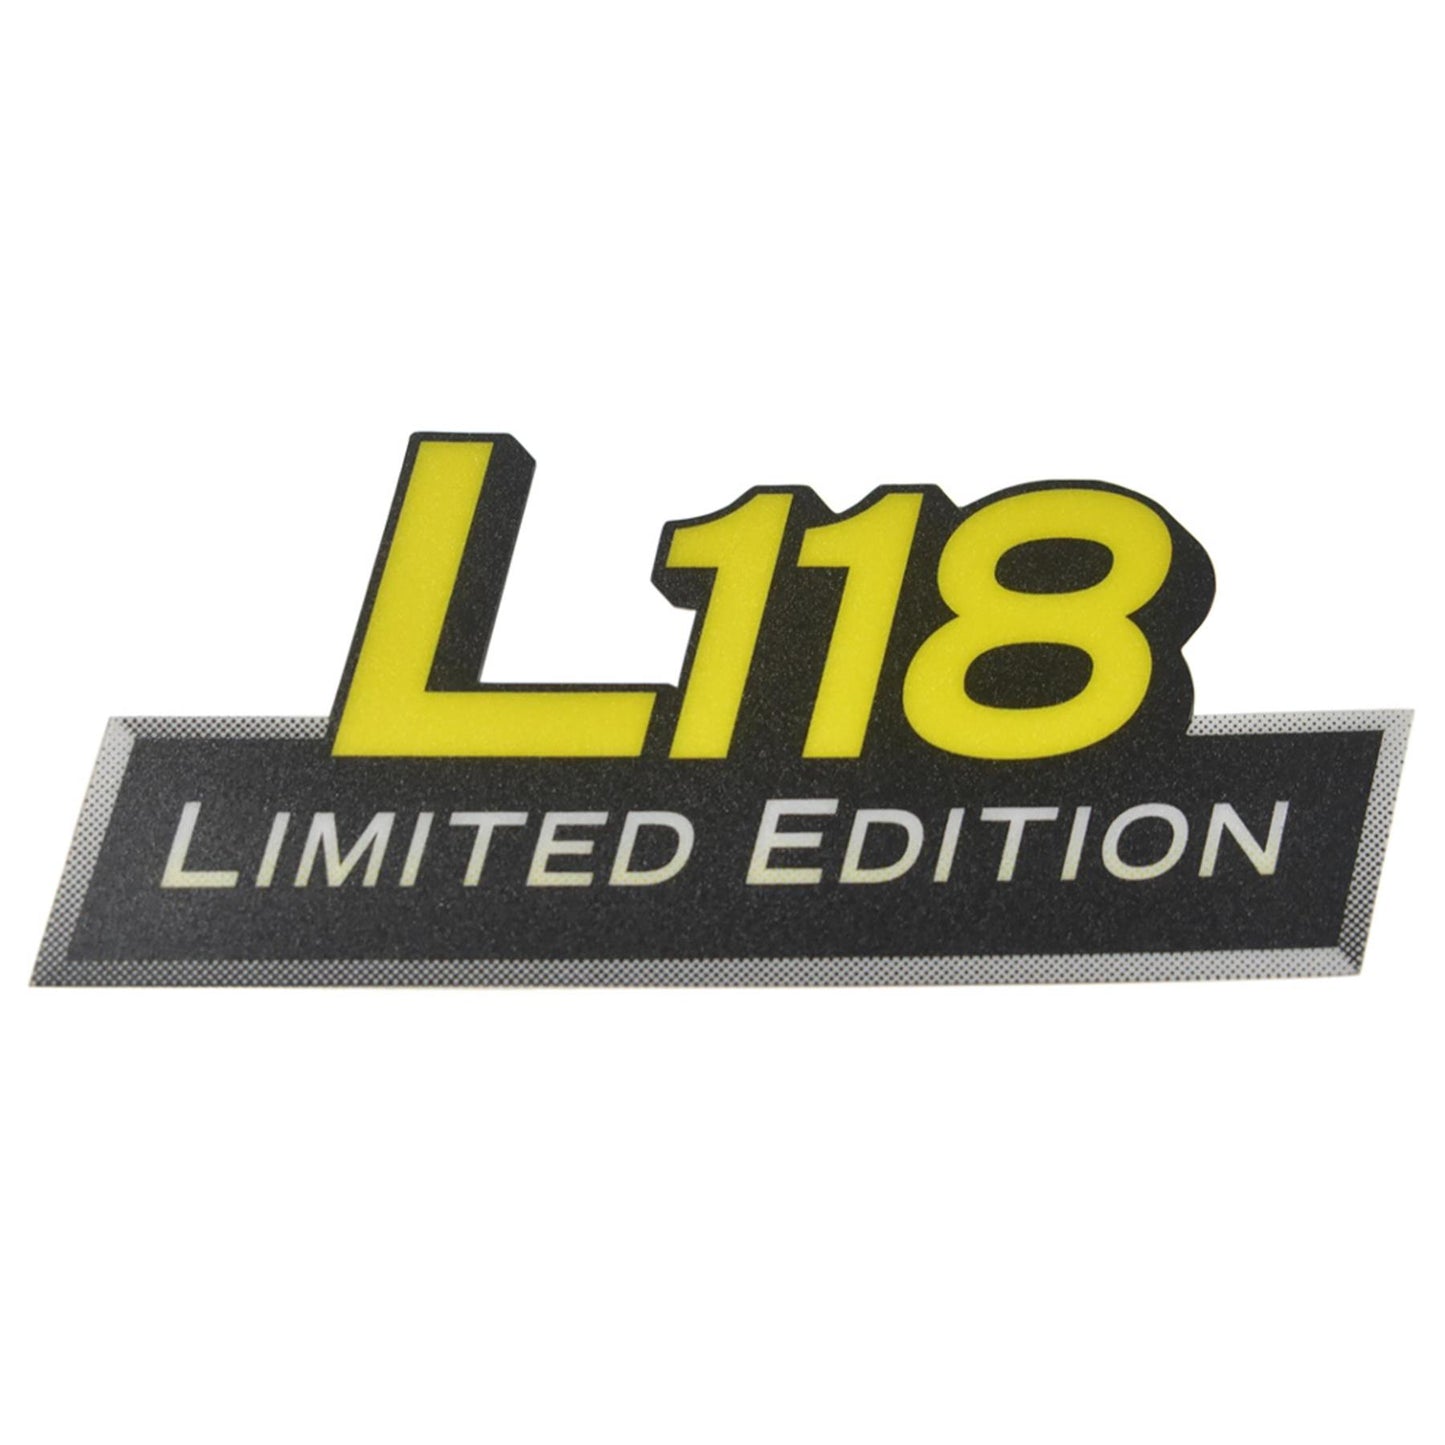 John Deere Decal - L118 Limited Edition - GX21686